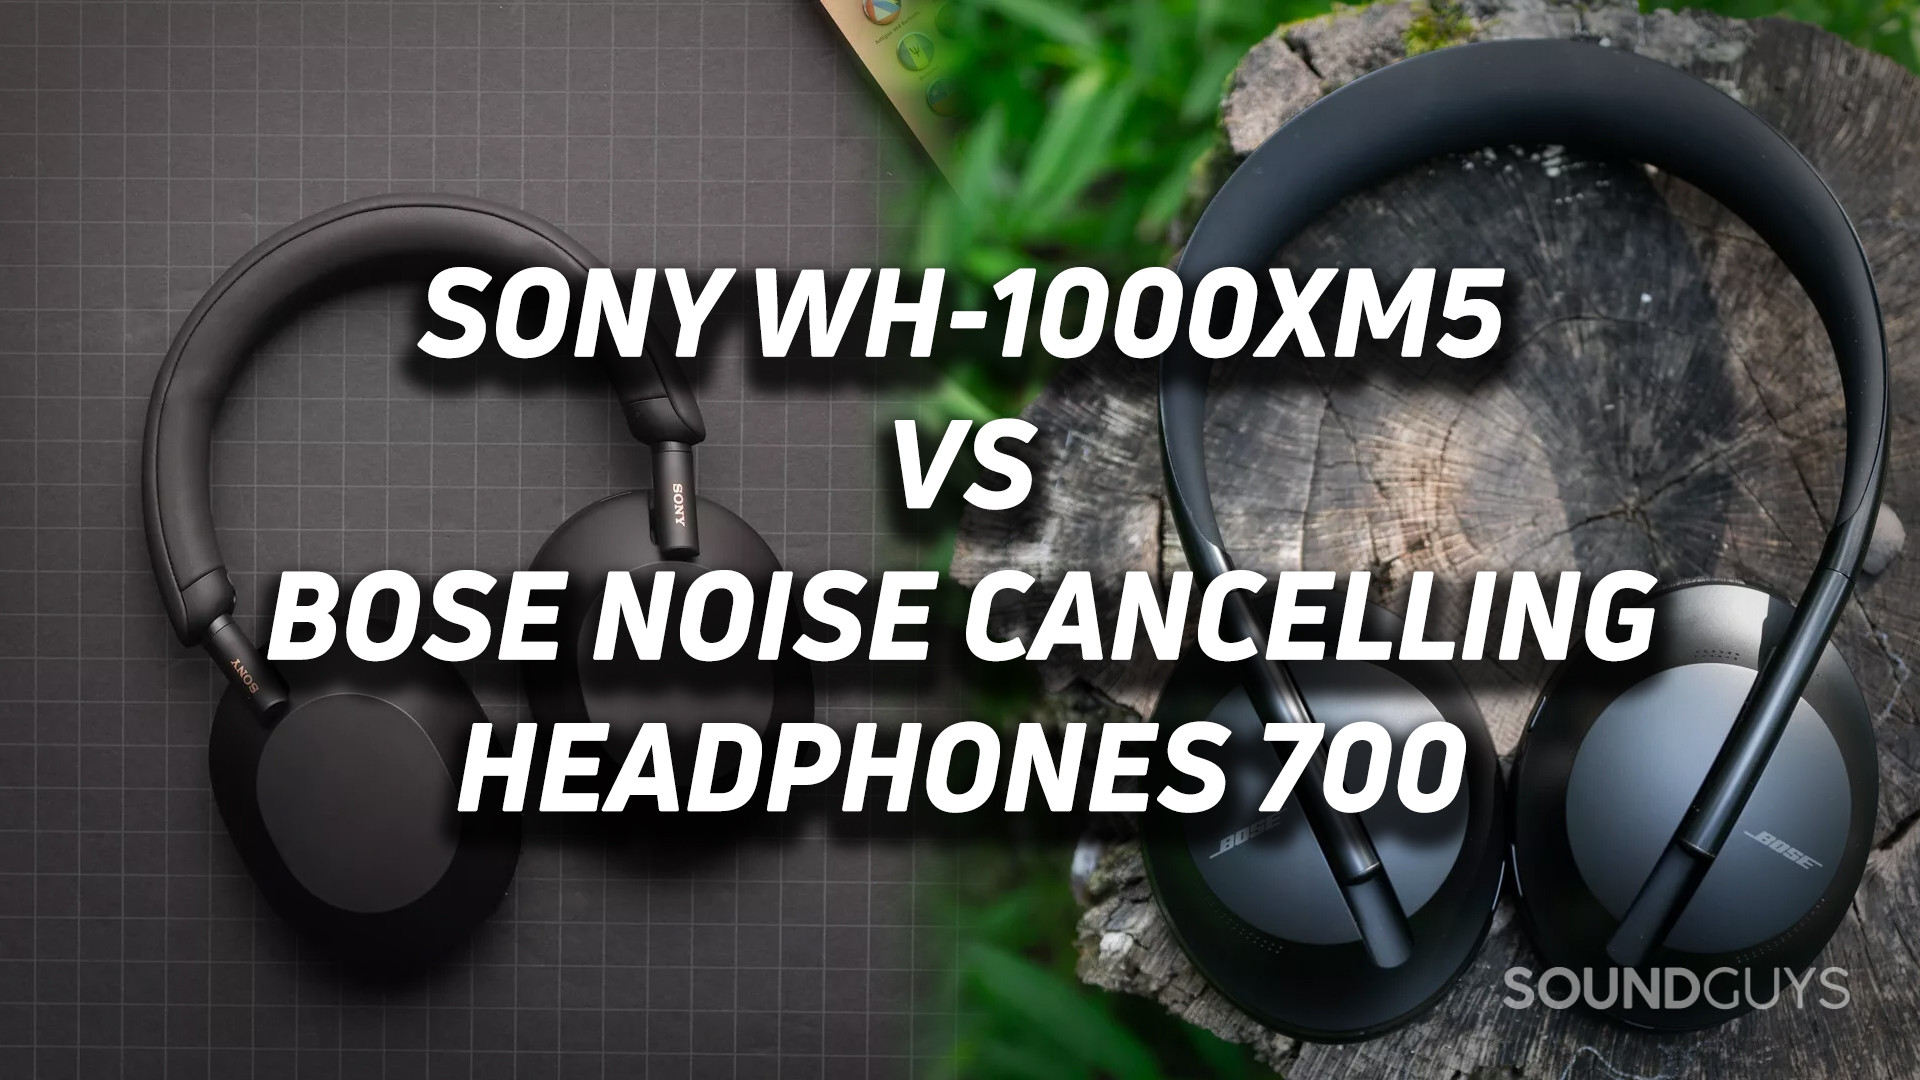 WH-1000XM5 Bose Noise Cancelling Headphones 700 SoundGuys